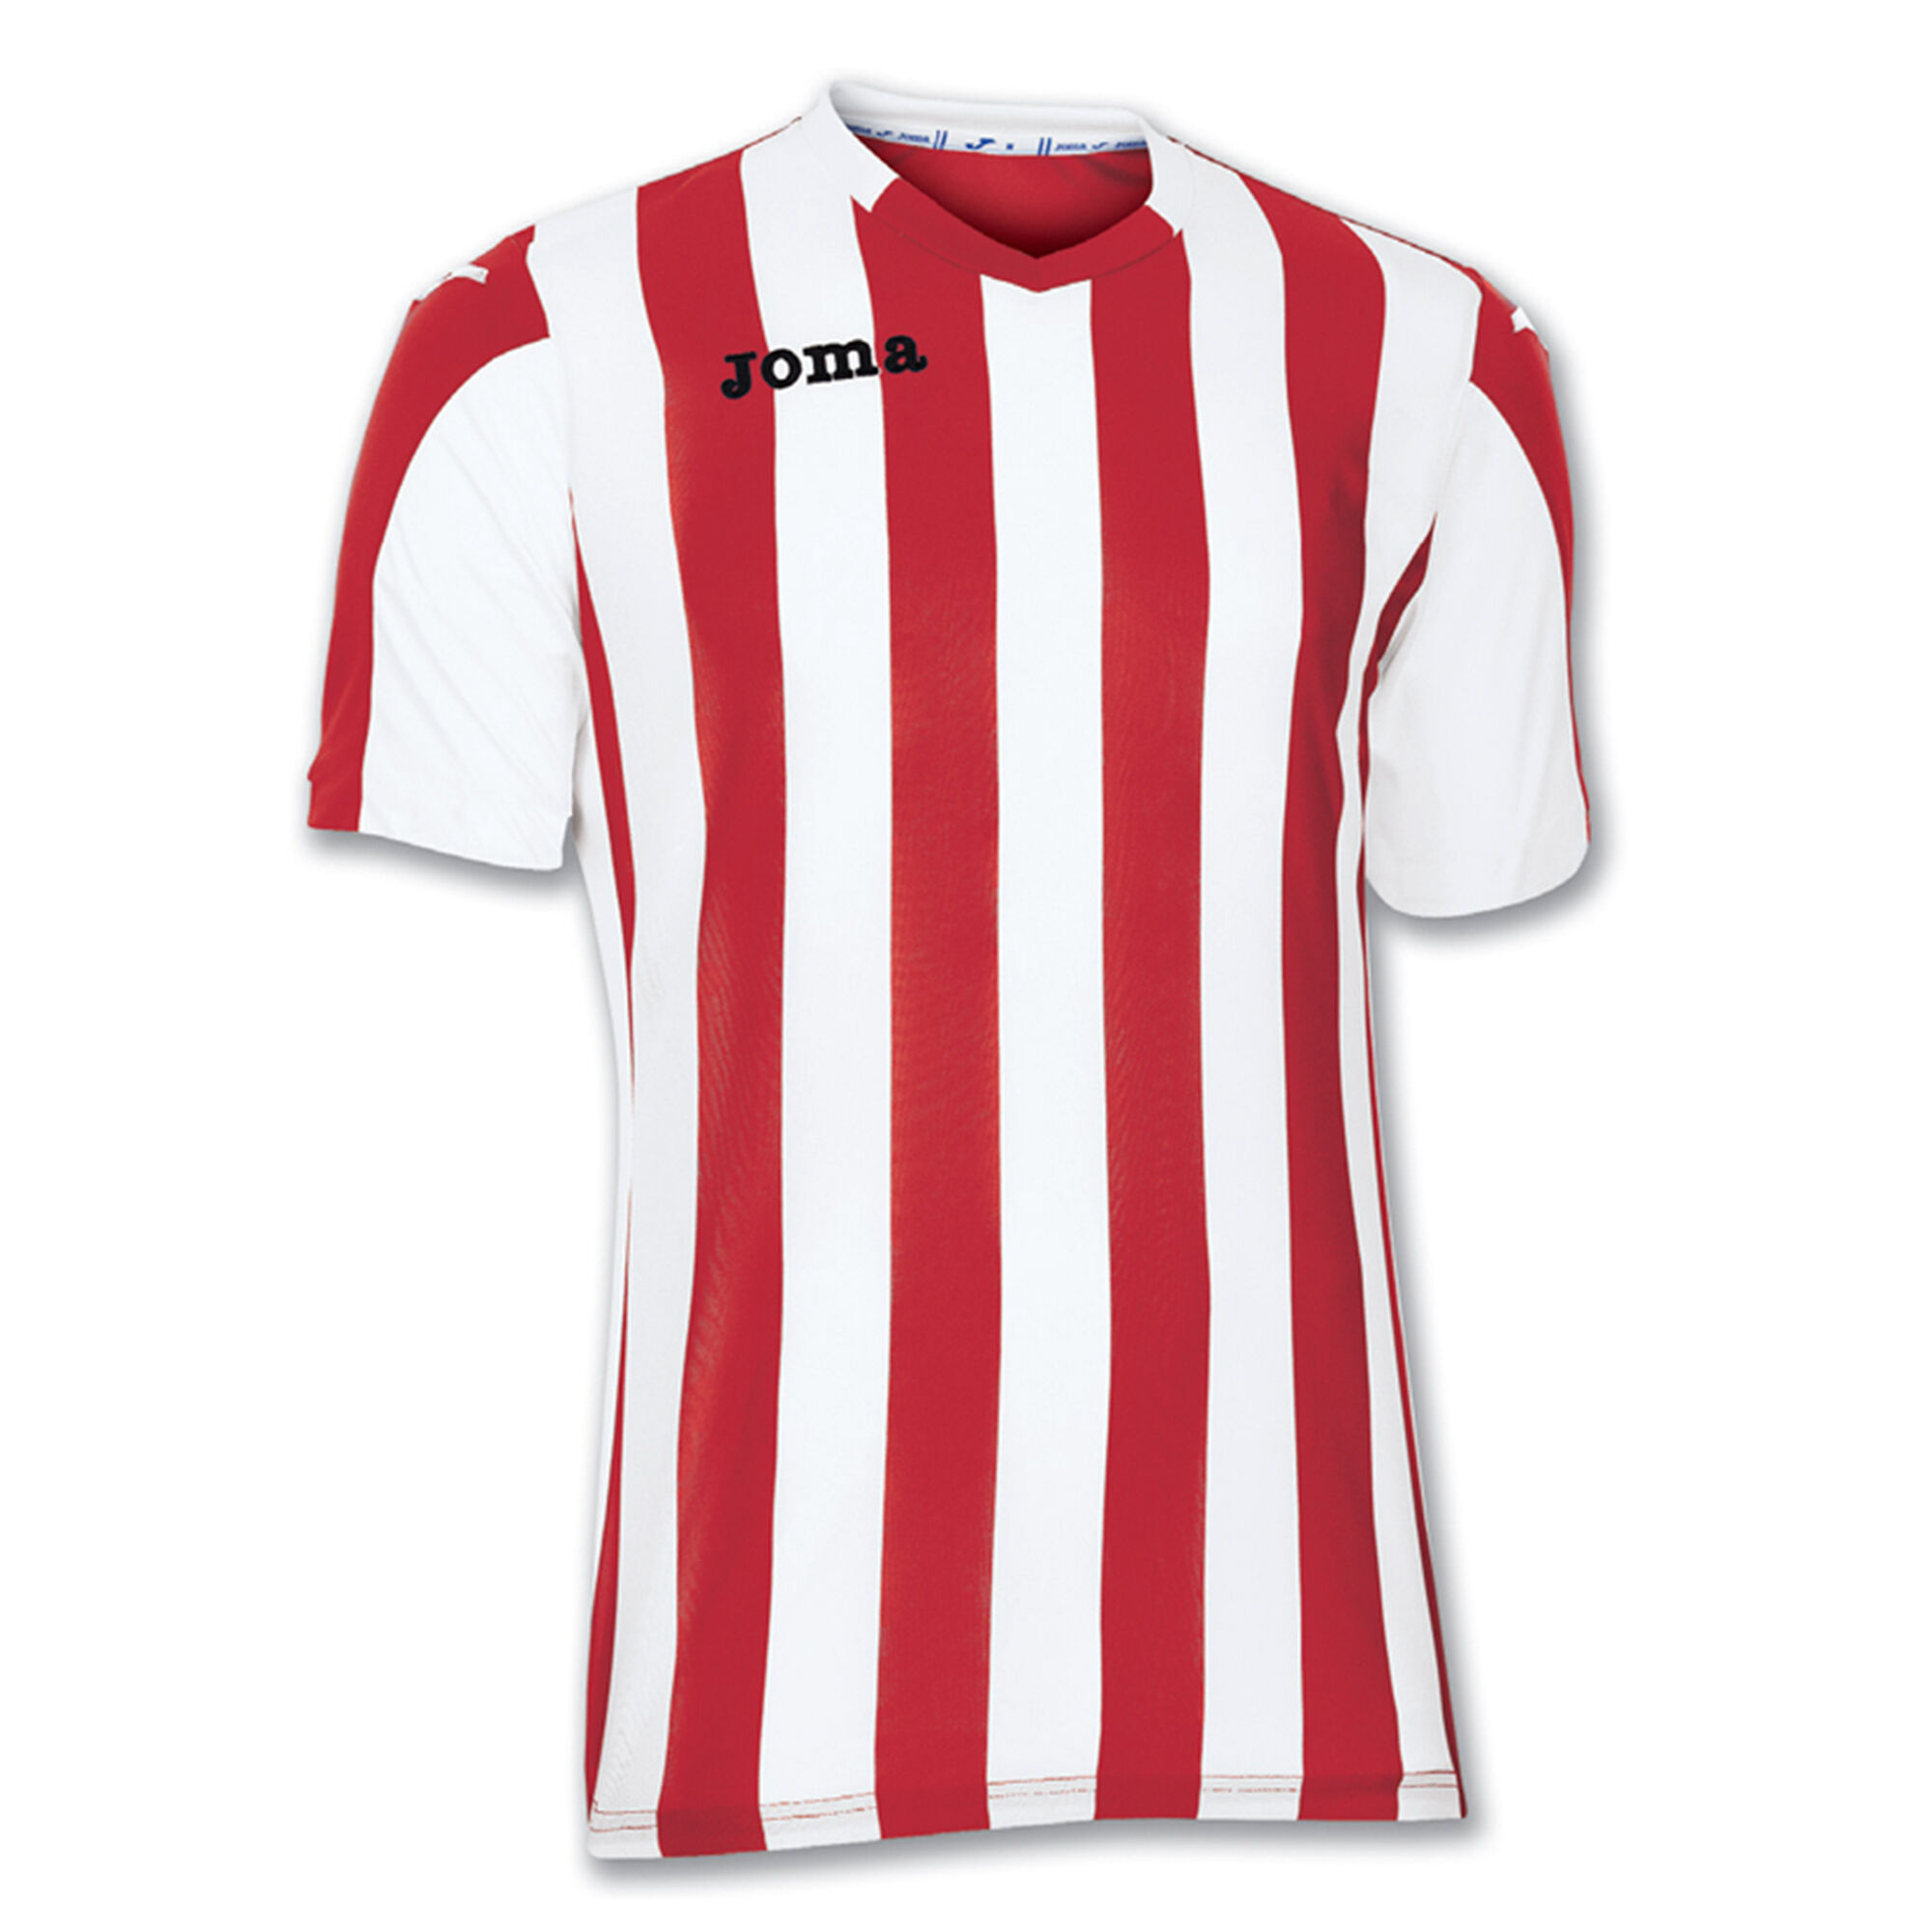 Shirt short sleeve Copa red white | JOMA®